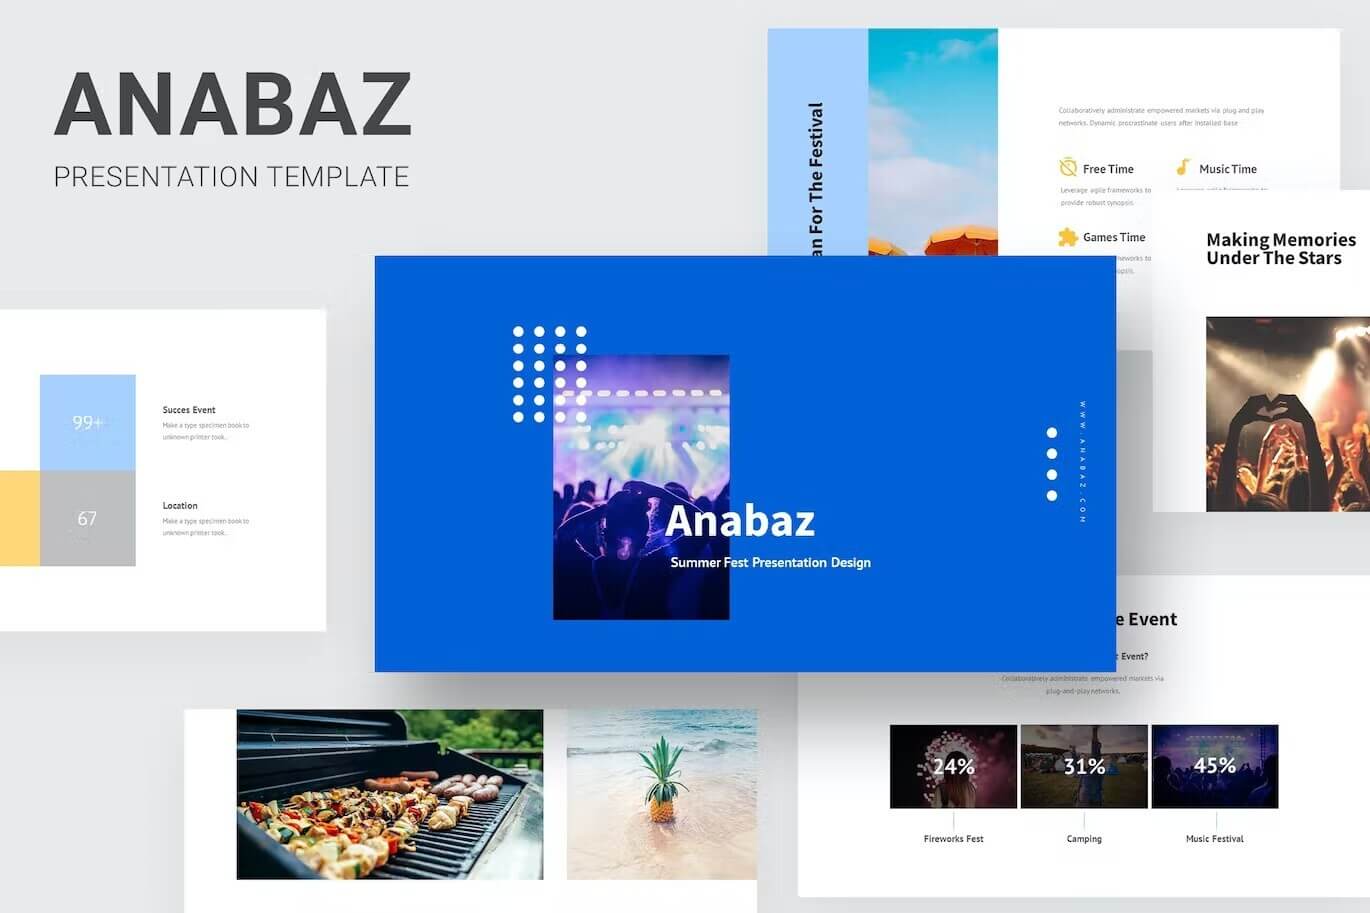 Anabaz summer fest presentation design.